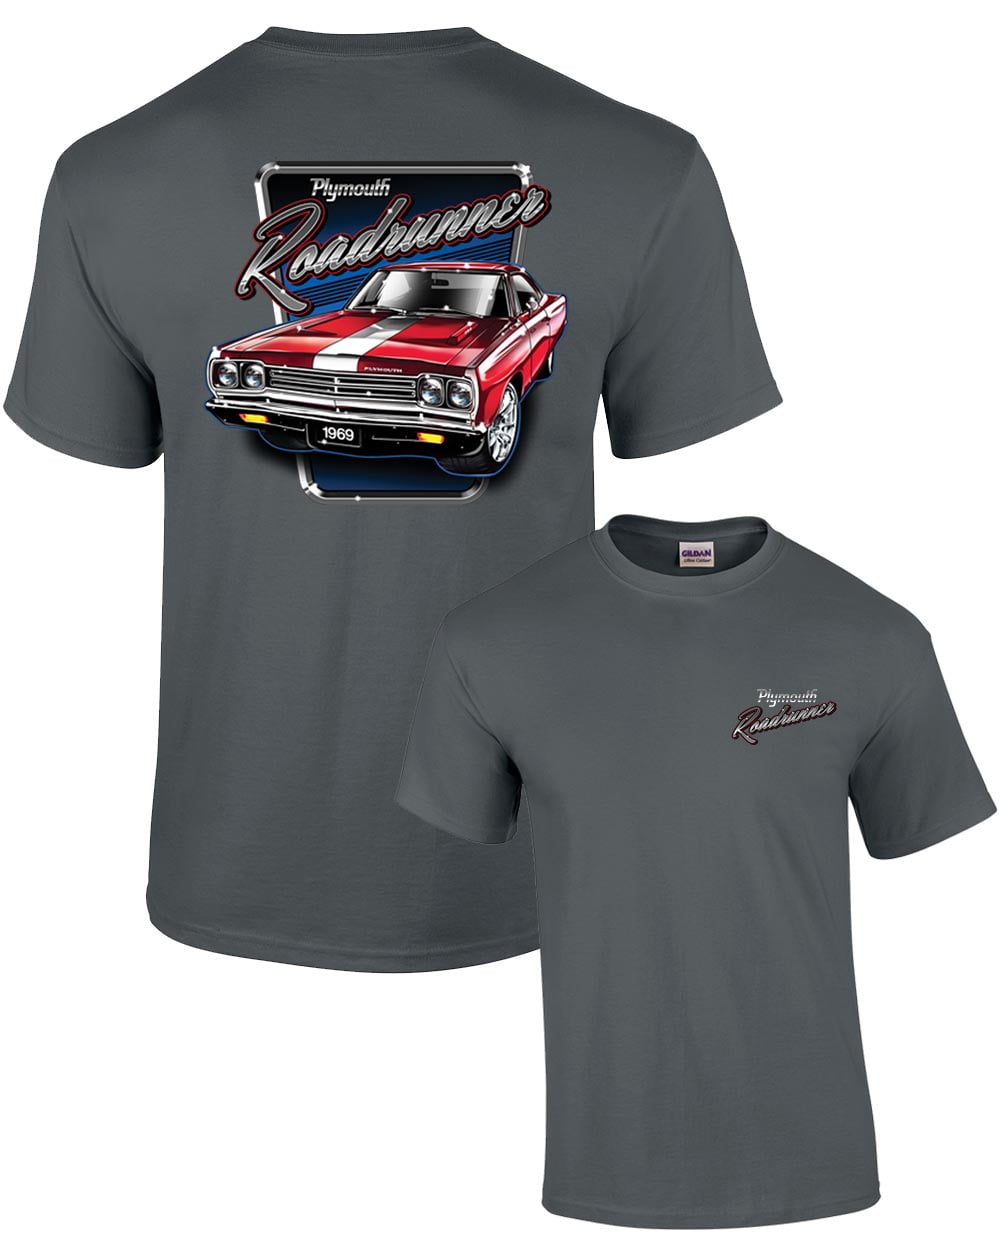 Trenz Shirt Company - Plymouth Roadrunner 1969 Car Adult Tee Shirt ...